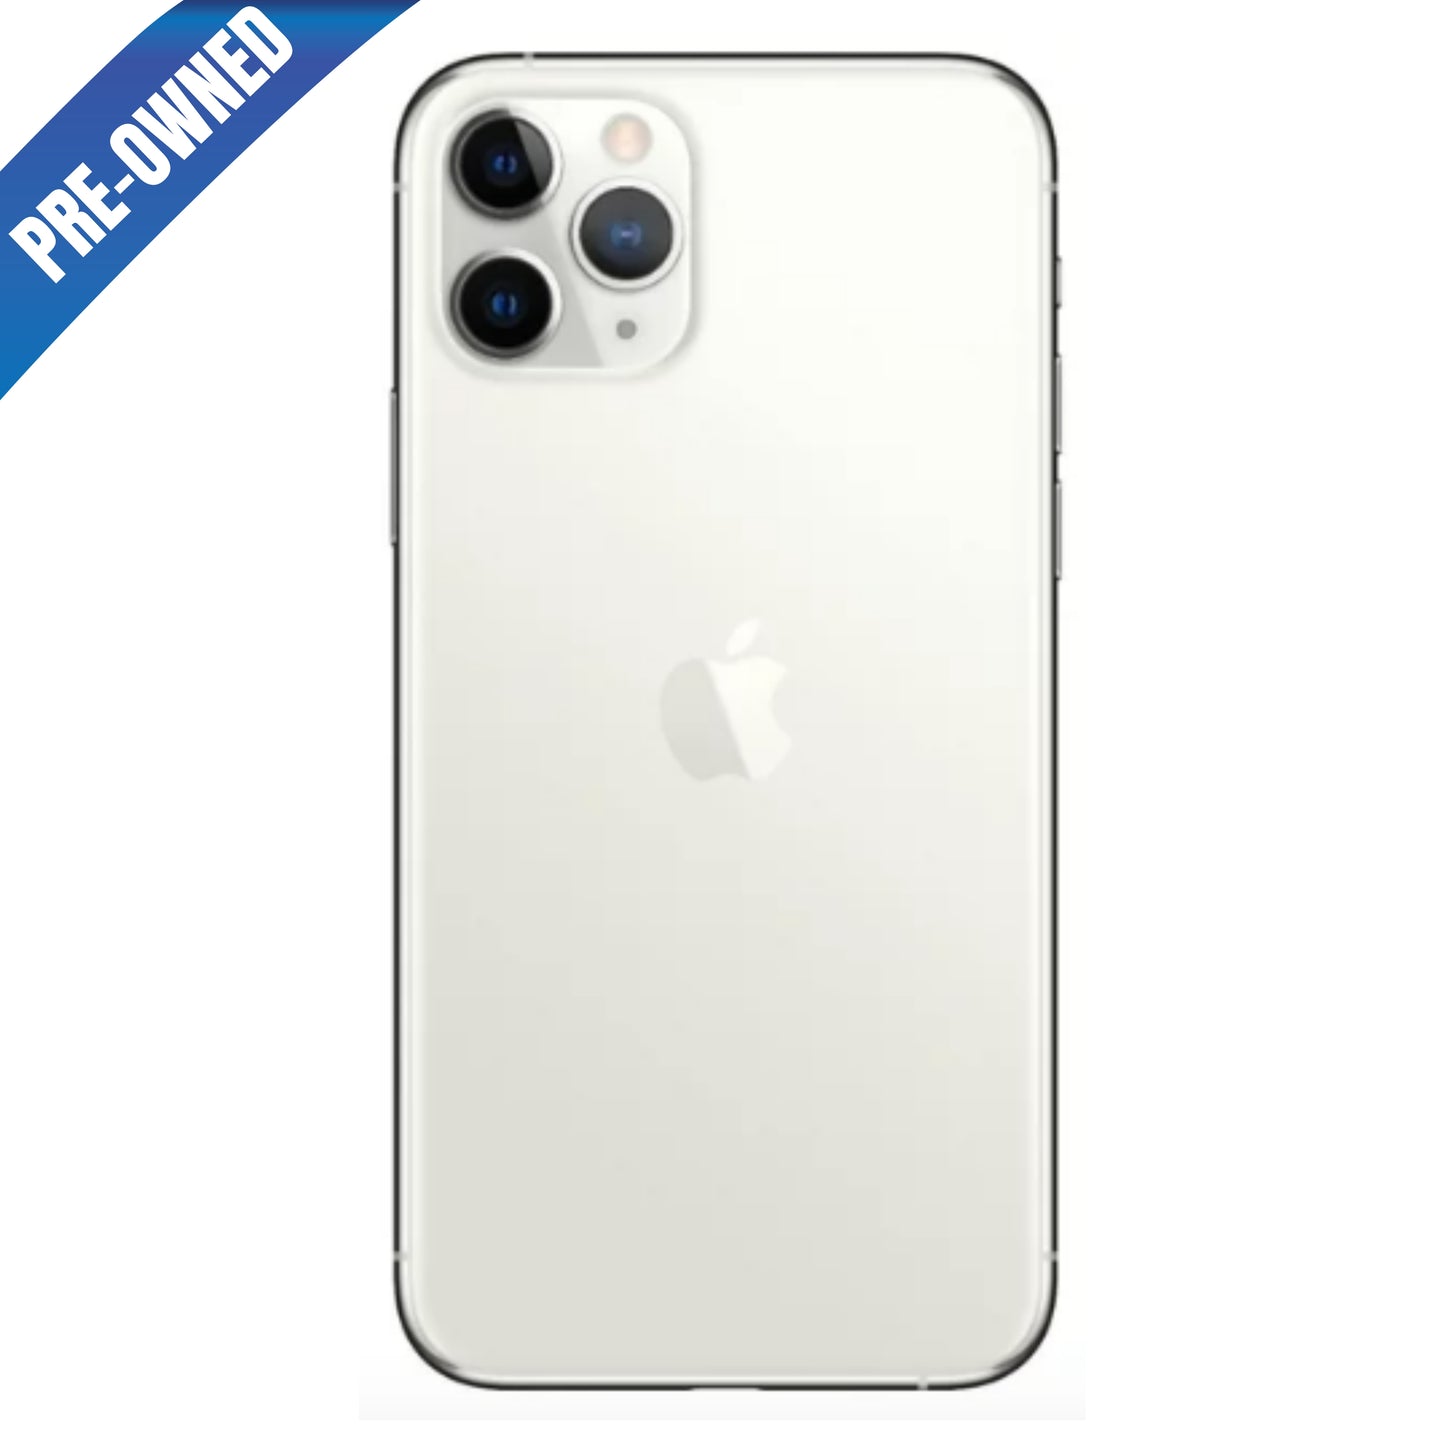 iPhone 11 Pro Plata 64GB (Desbloqueado) Usado